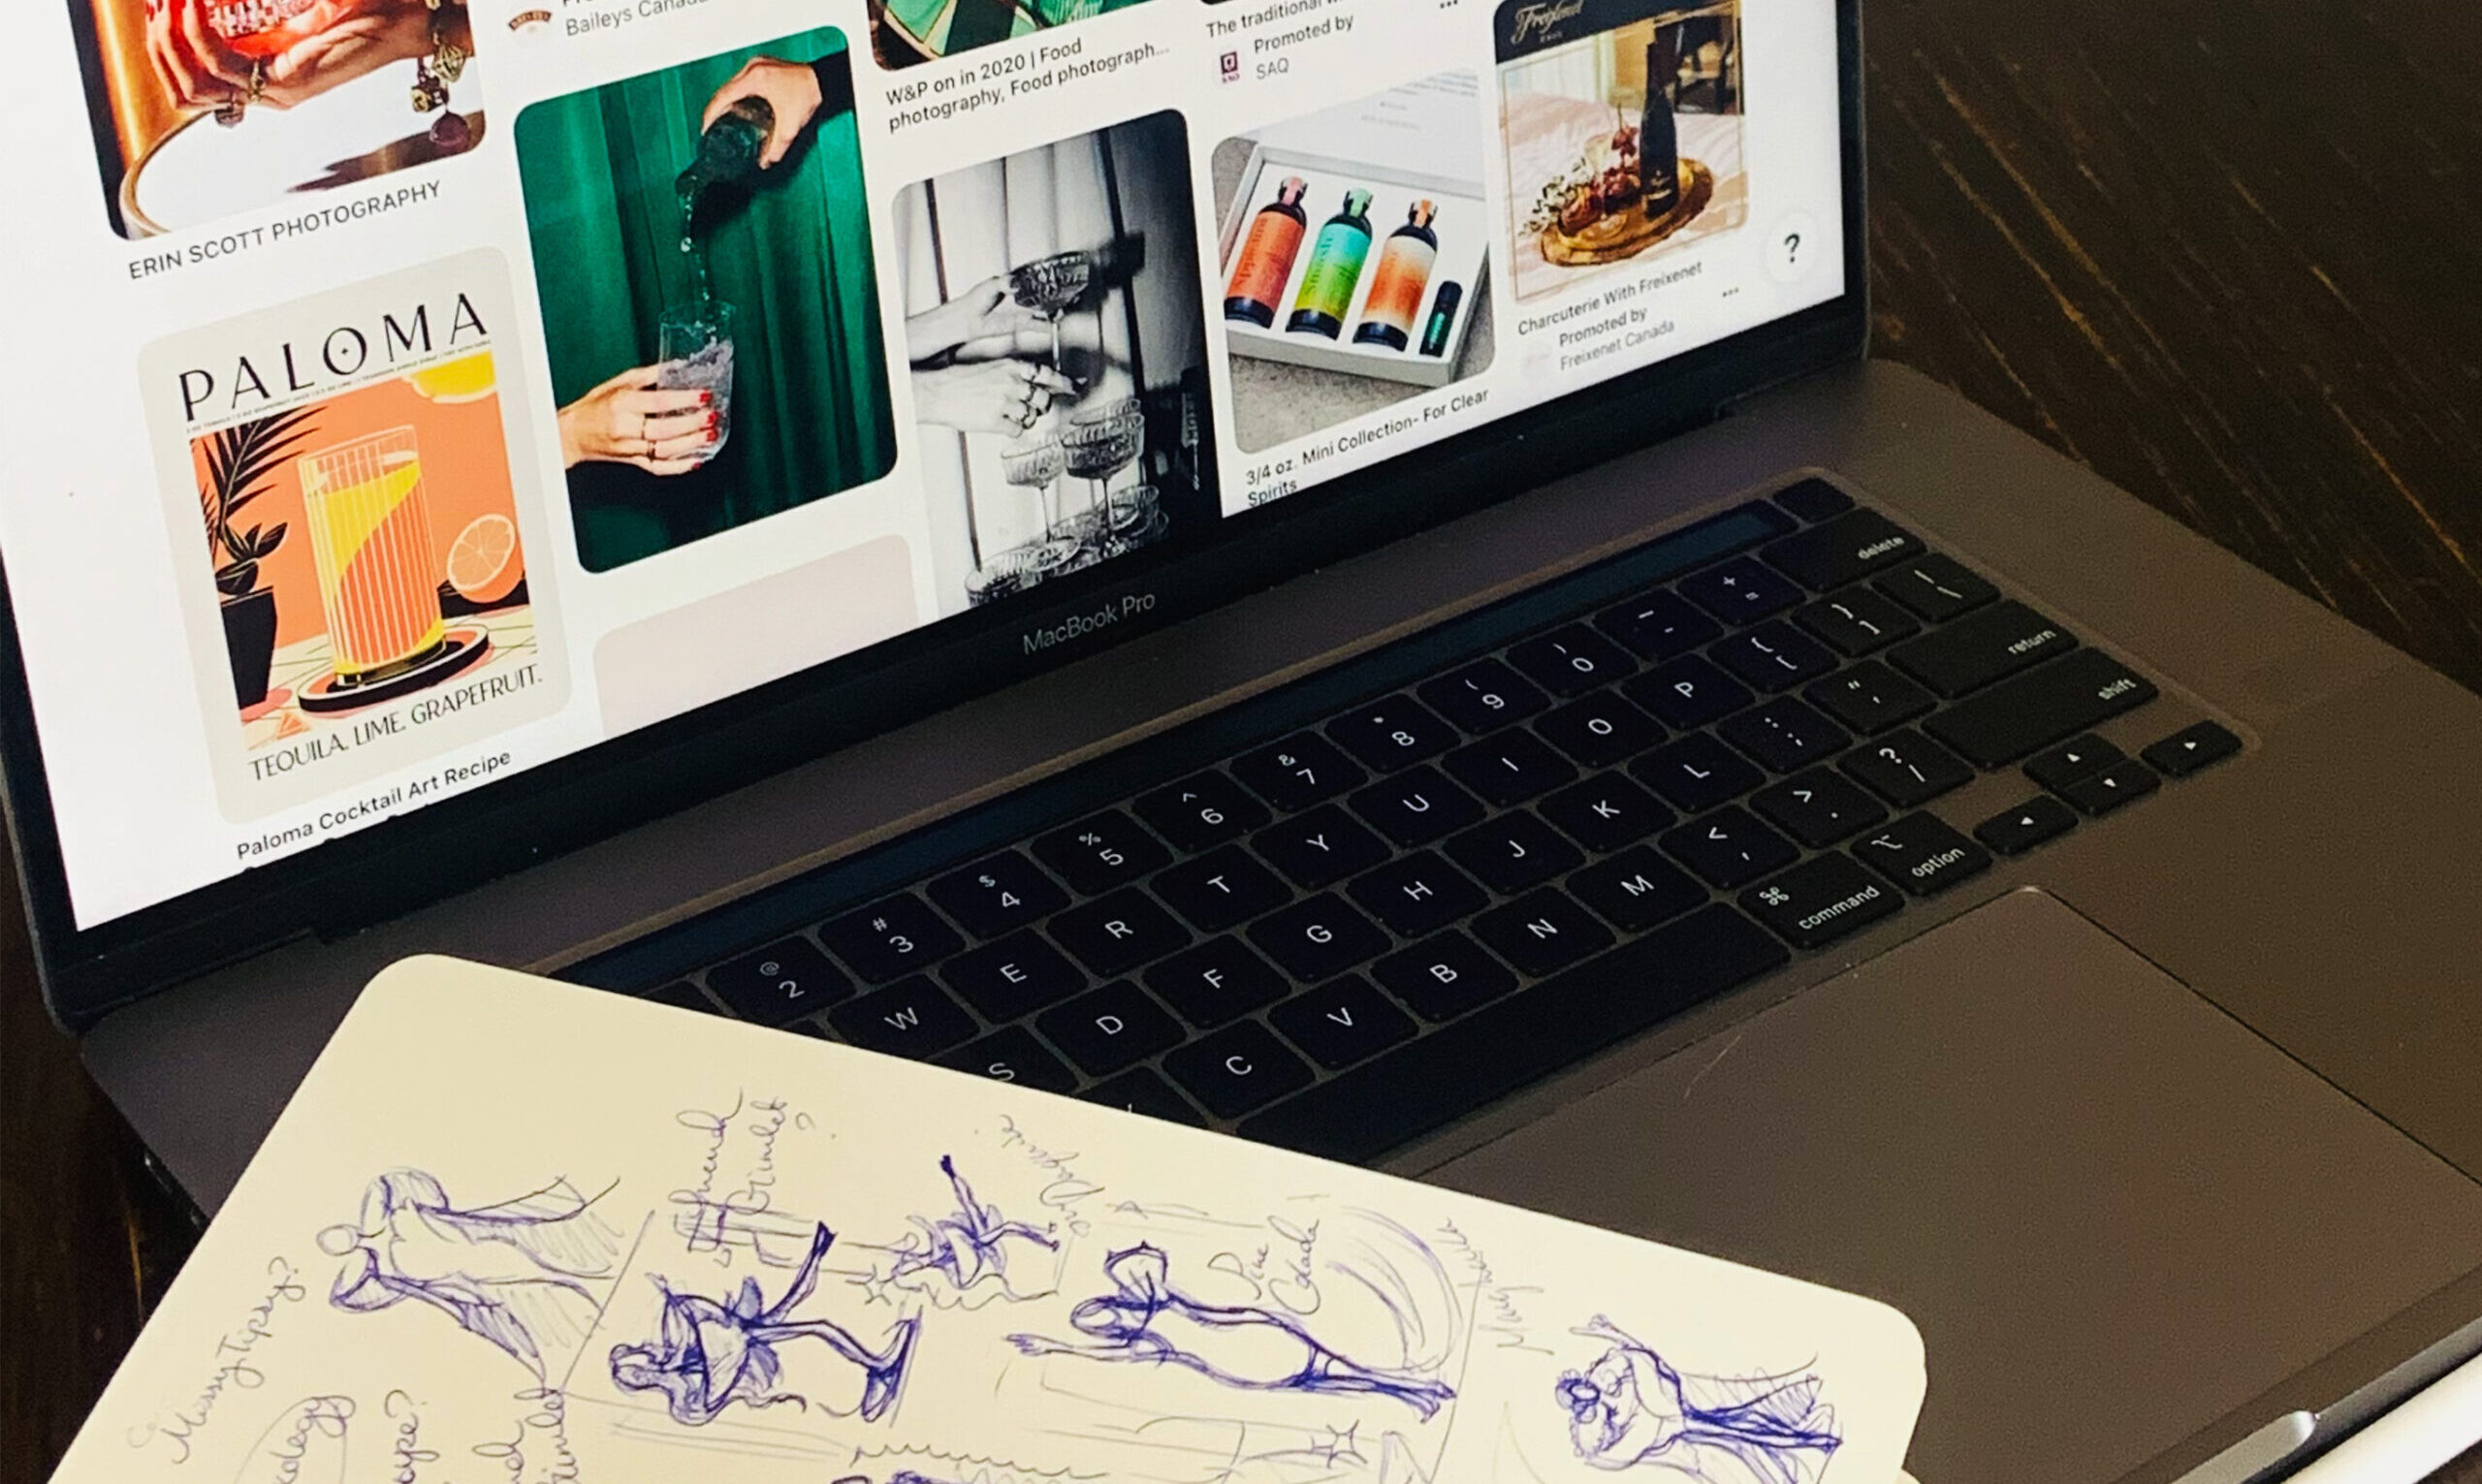 web thumbnail for Skye's Graphic Design Eportfolio. It is a landscape image of computer alongside a sketchbook.